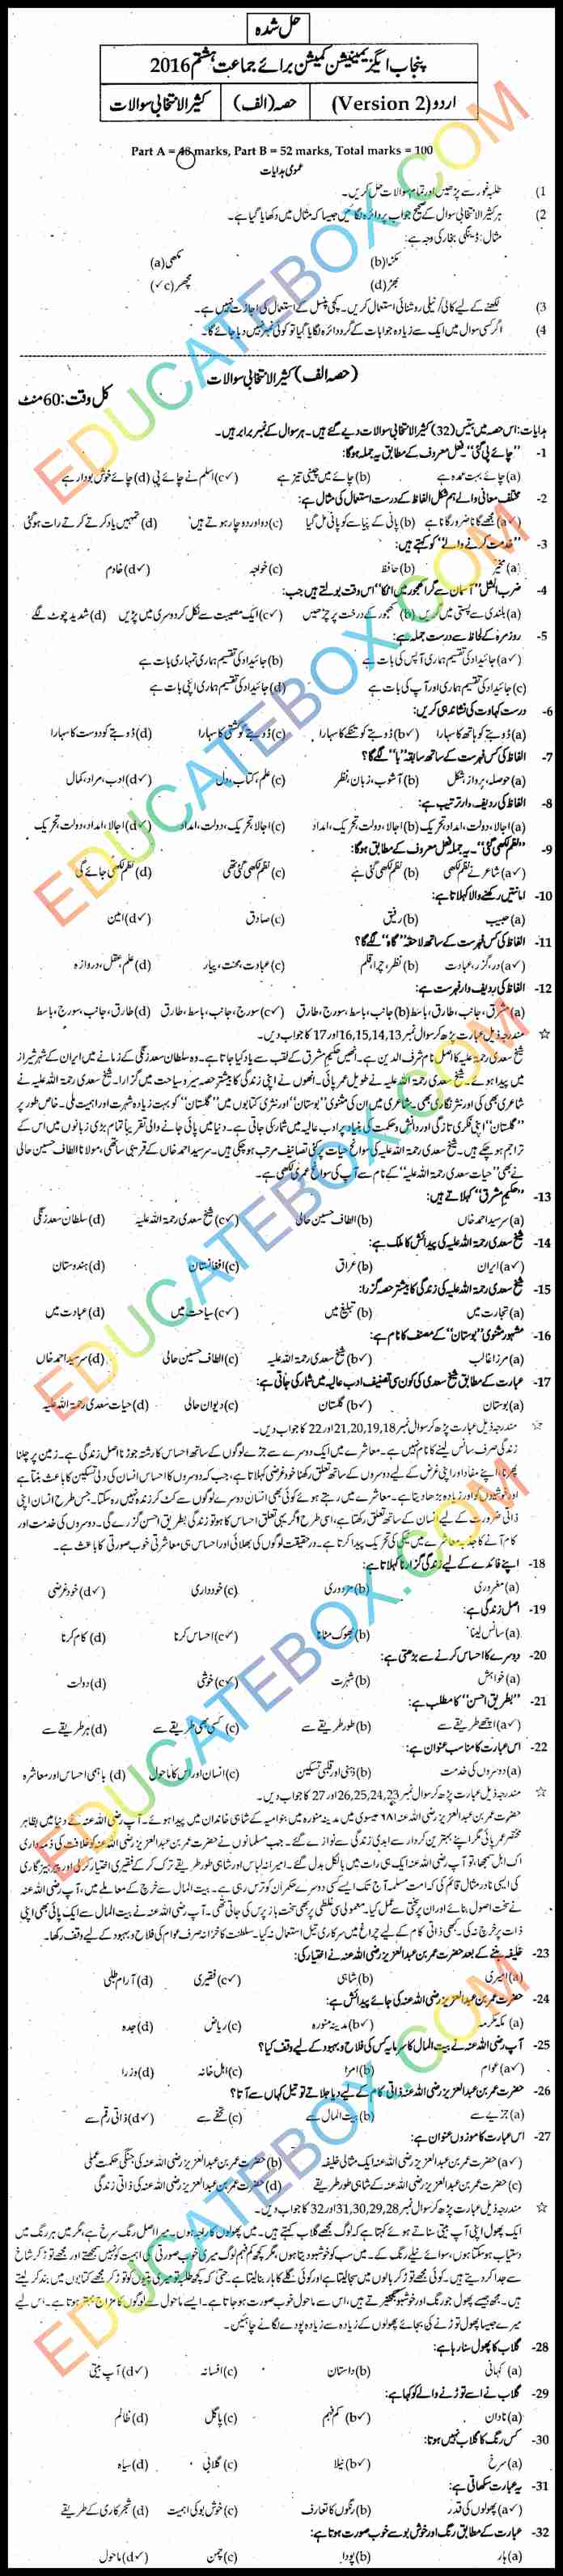 Past Paper 8th Class Urdu 2016 Solved Paper Punjab Board (PEC) Objective Type Version 2 اپ ٹو ڈیٹ پیپر آٹھویں کلاس اردو 2016 حل شدہ پیپر پنجاب بورڈ معروضی طرز۔ ورژن2